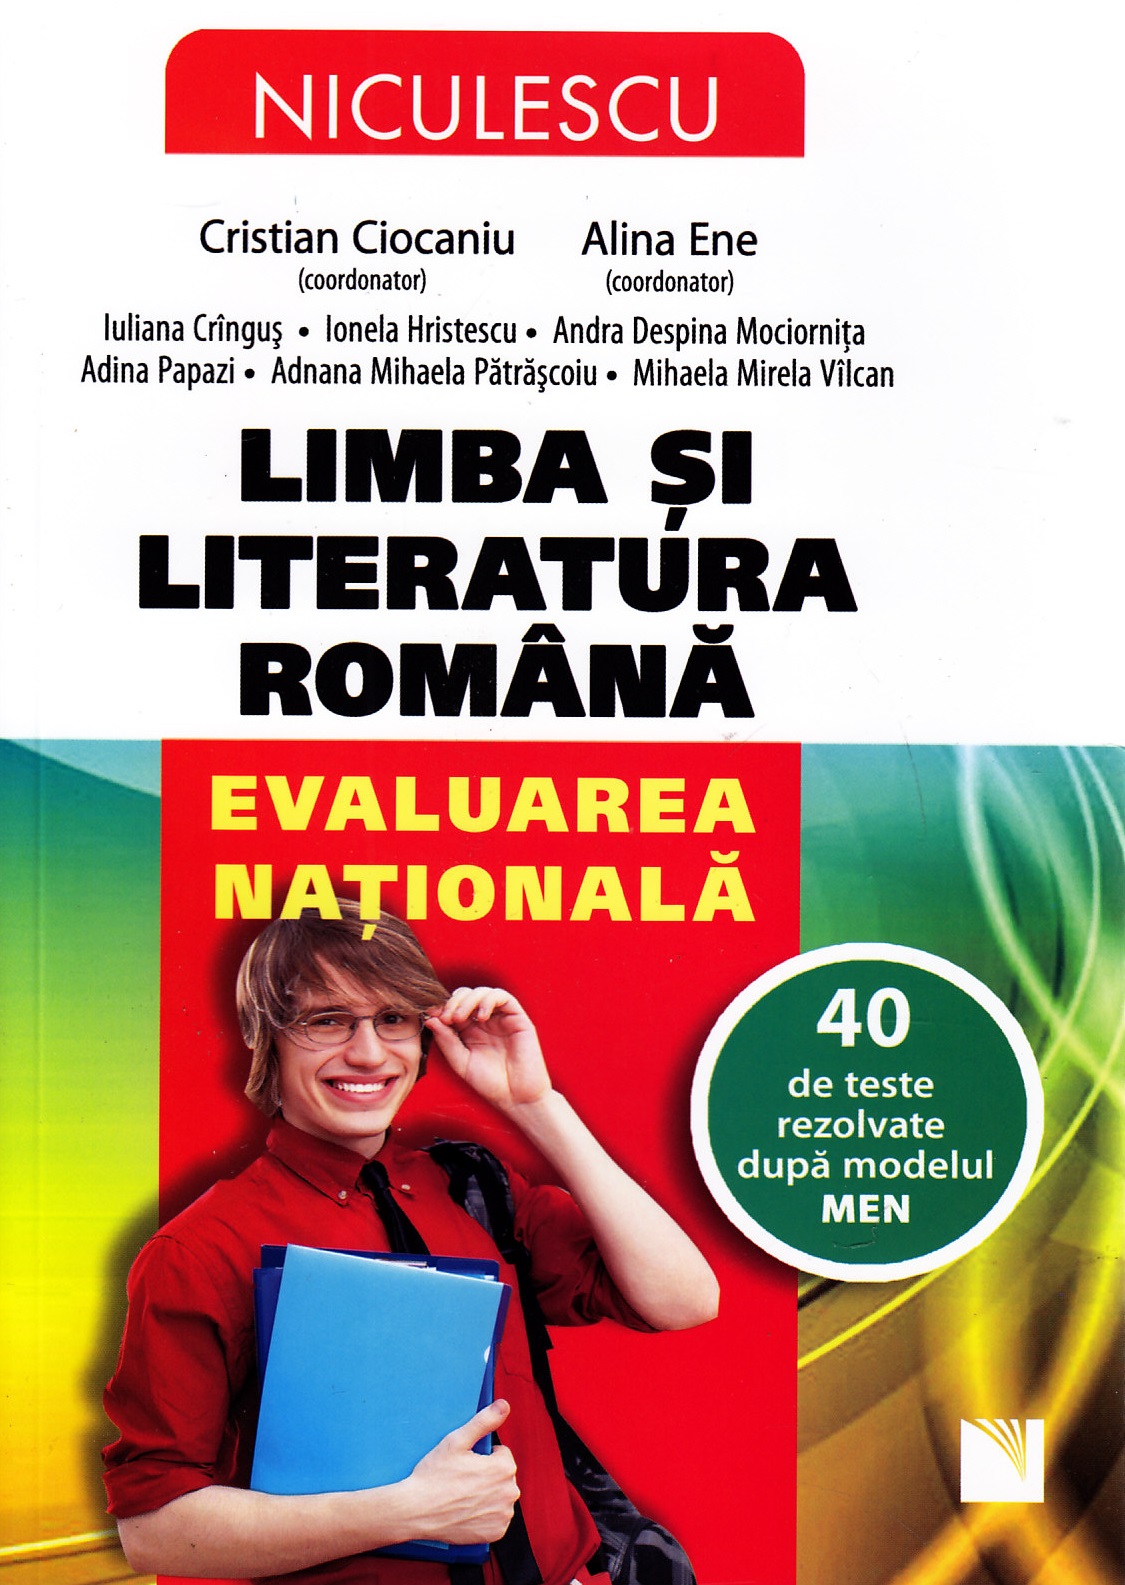 Romana Evaluare Nationala 40 de teste rezolvate - Cristian Ciocaniu, Alina Ene